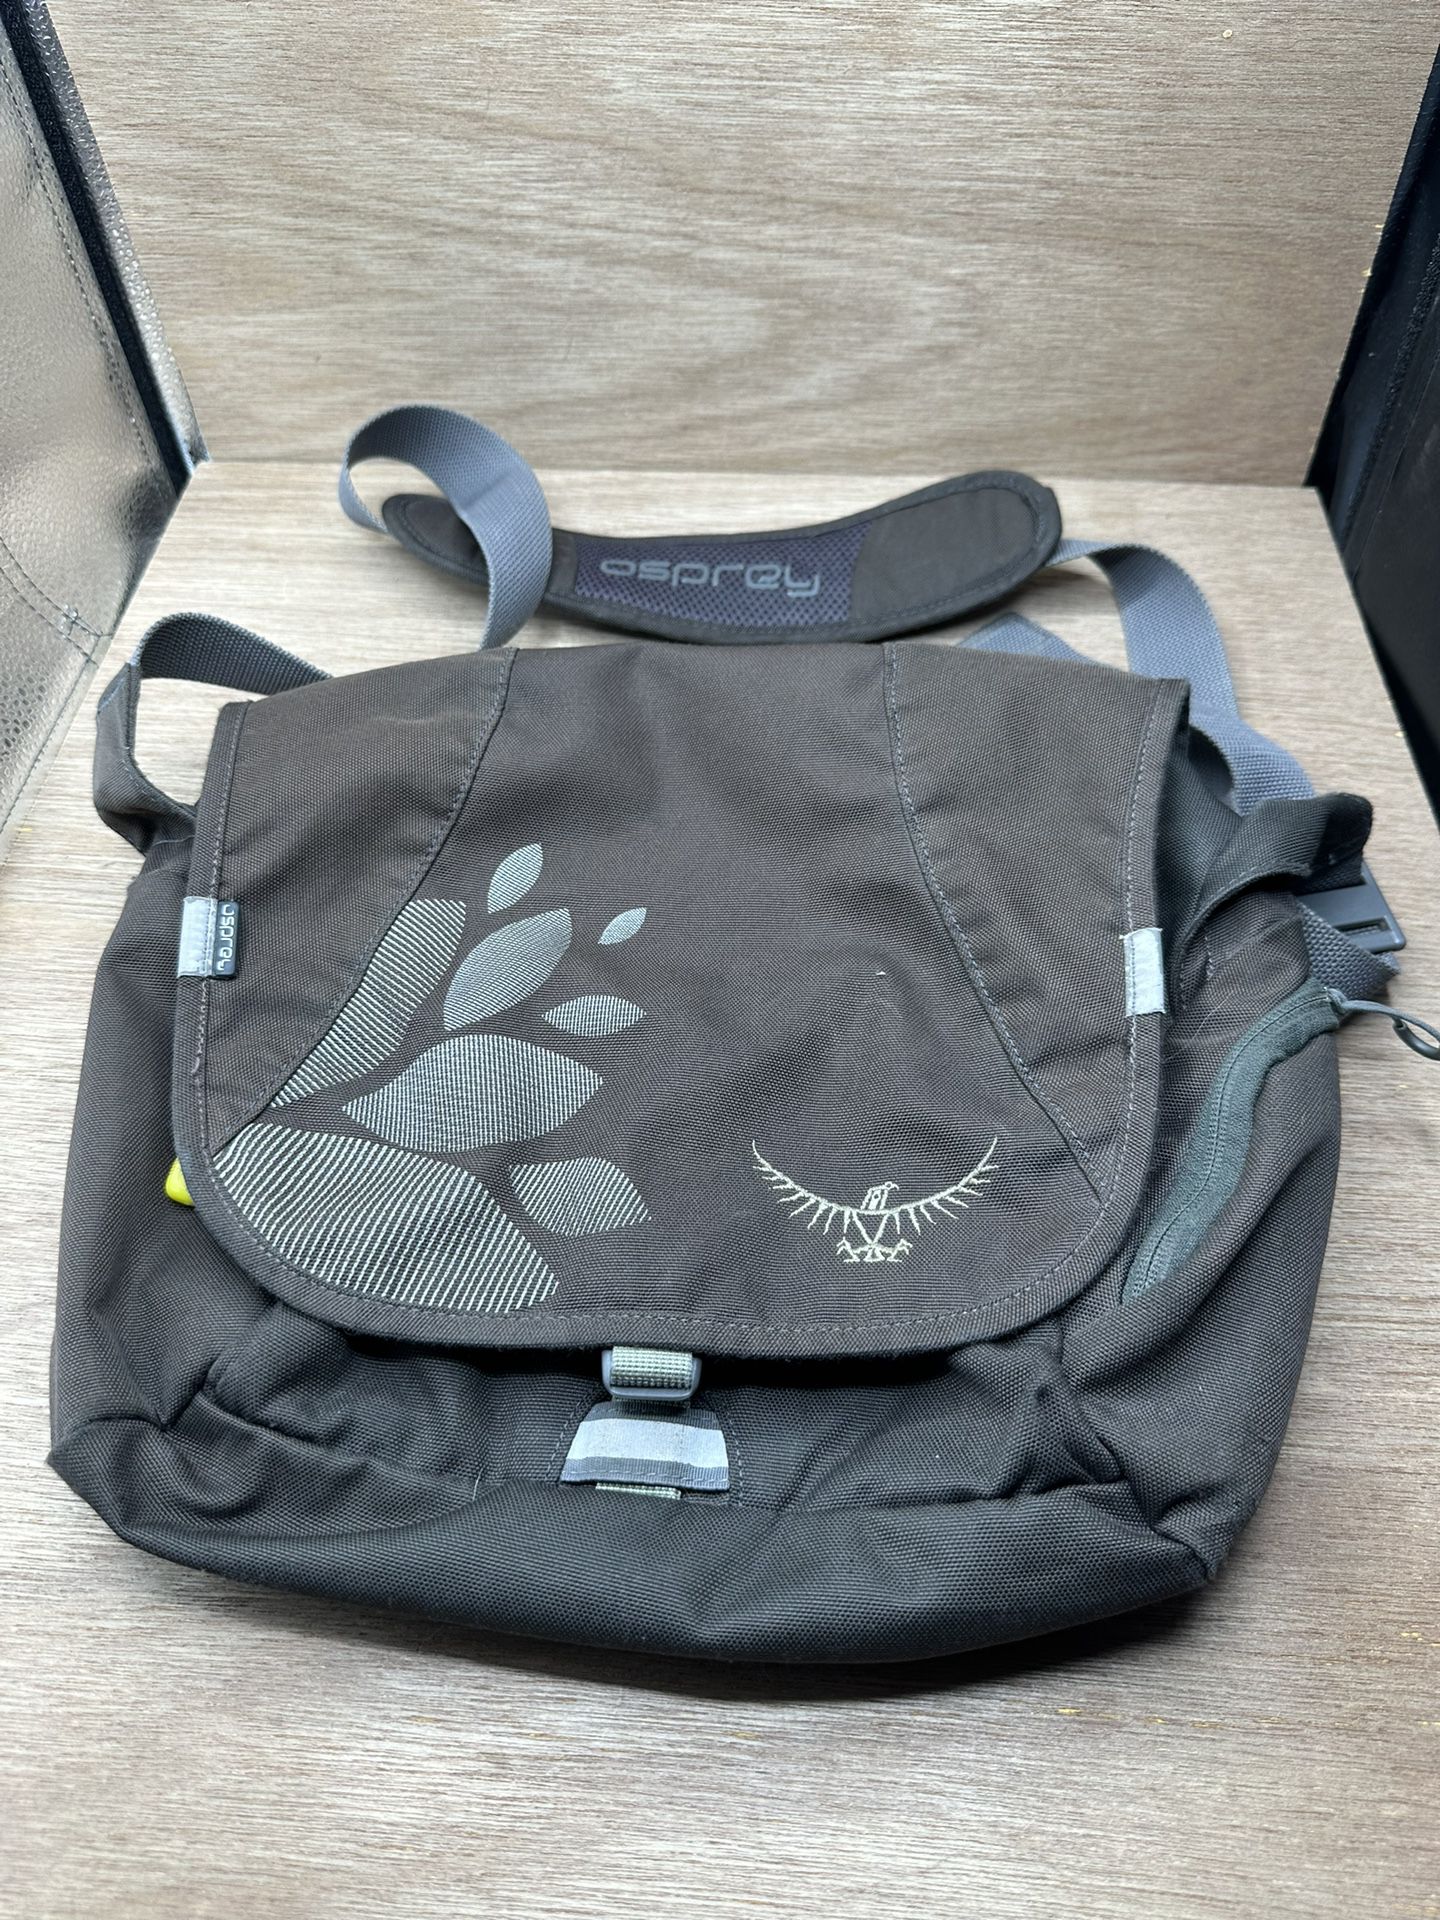 Osprey Flap Jill Courier Messenger Laptop Bag Dark Grey/Black Stains